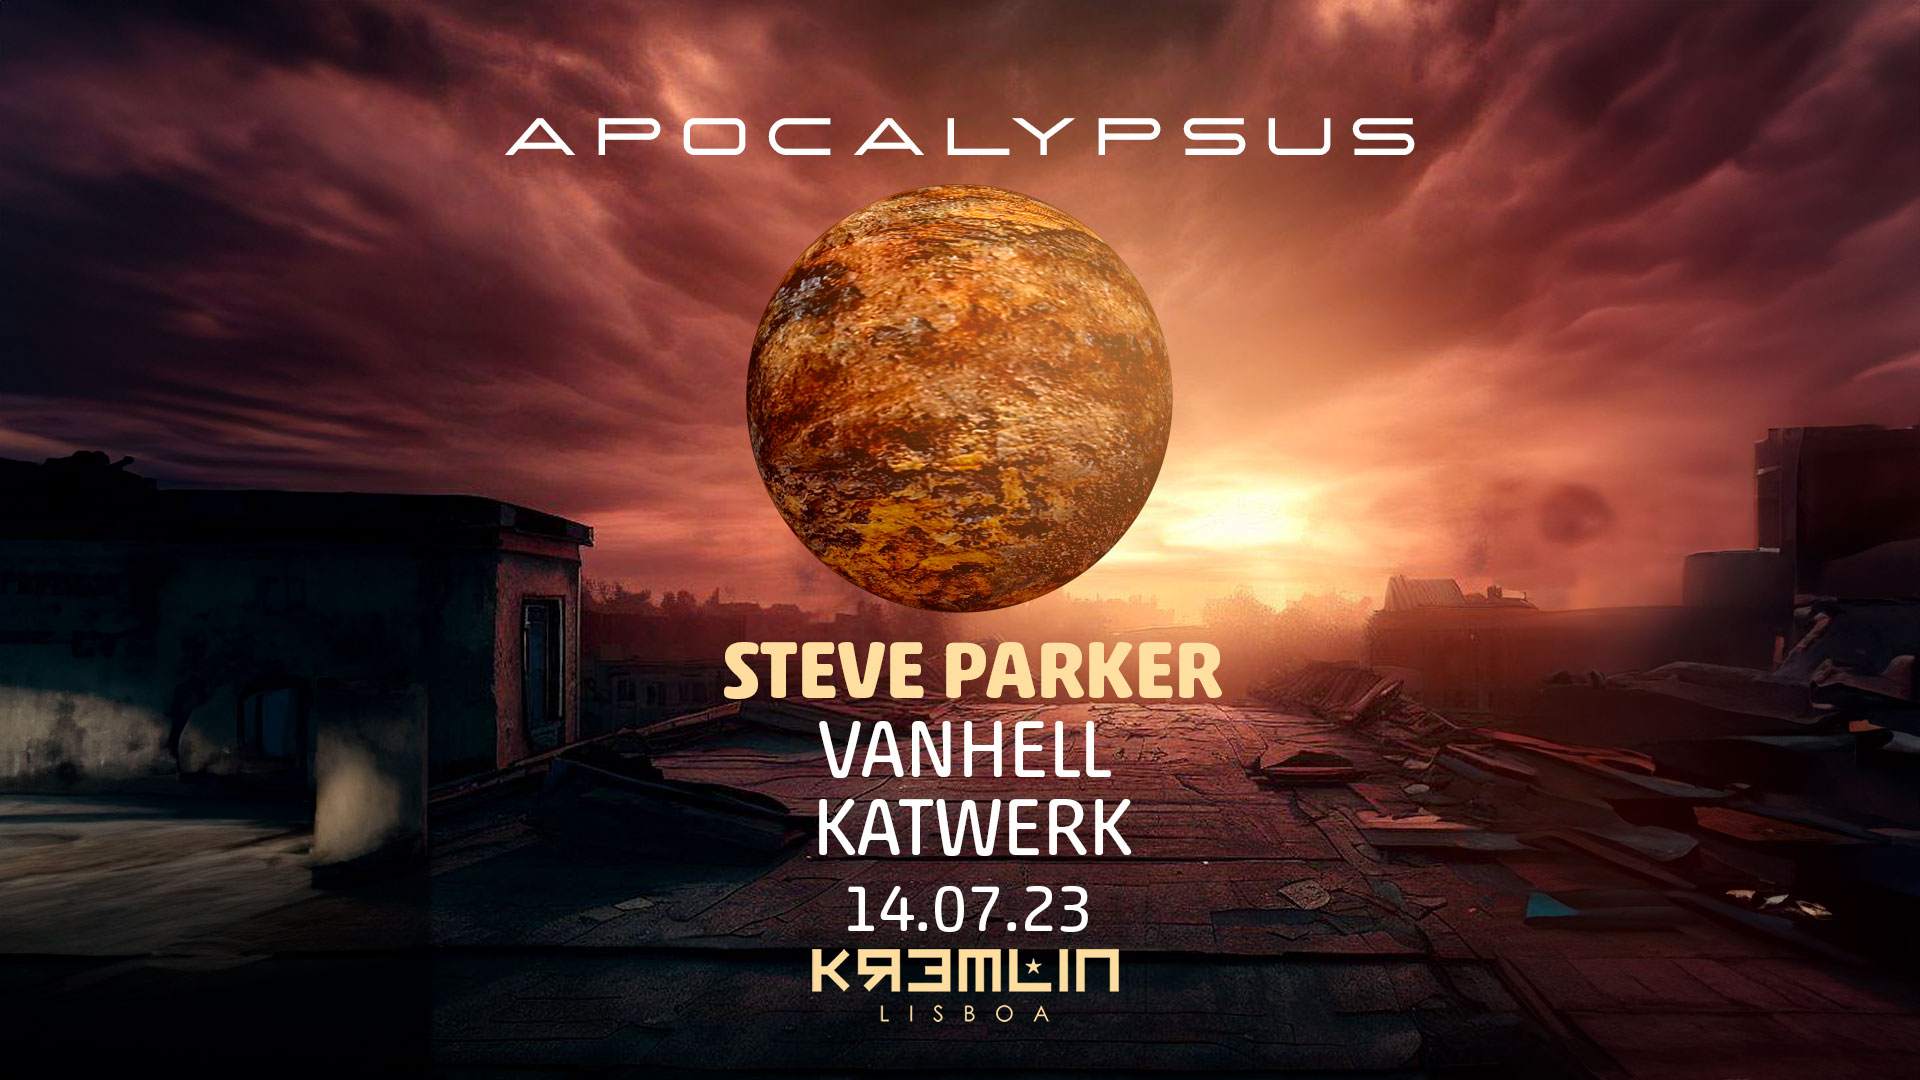 Apocalipsus - Steve Parker, Vanhell, Katwerk - フライヤー表